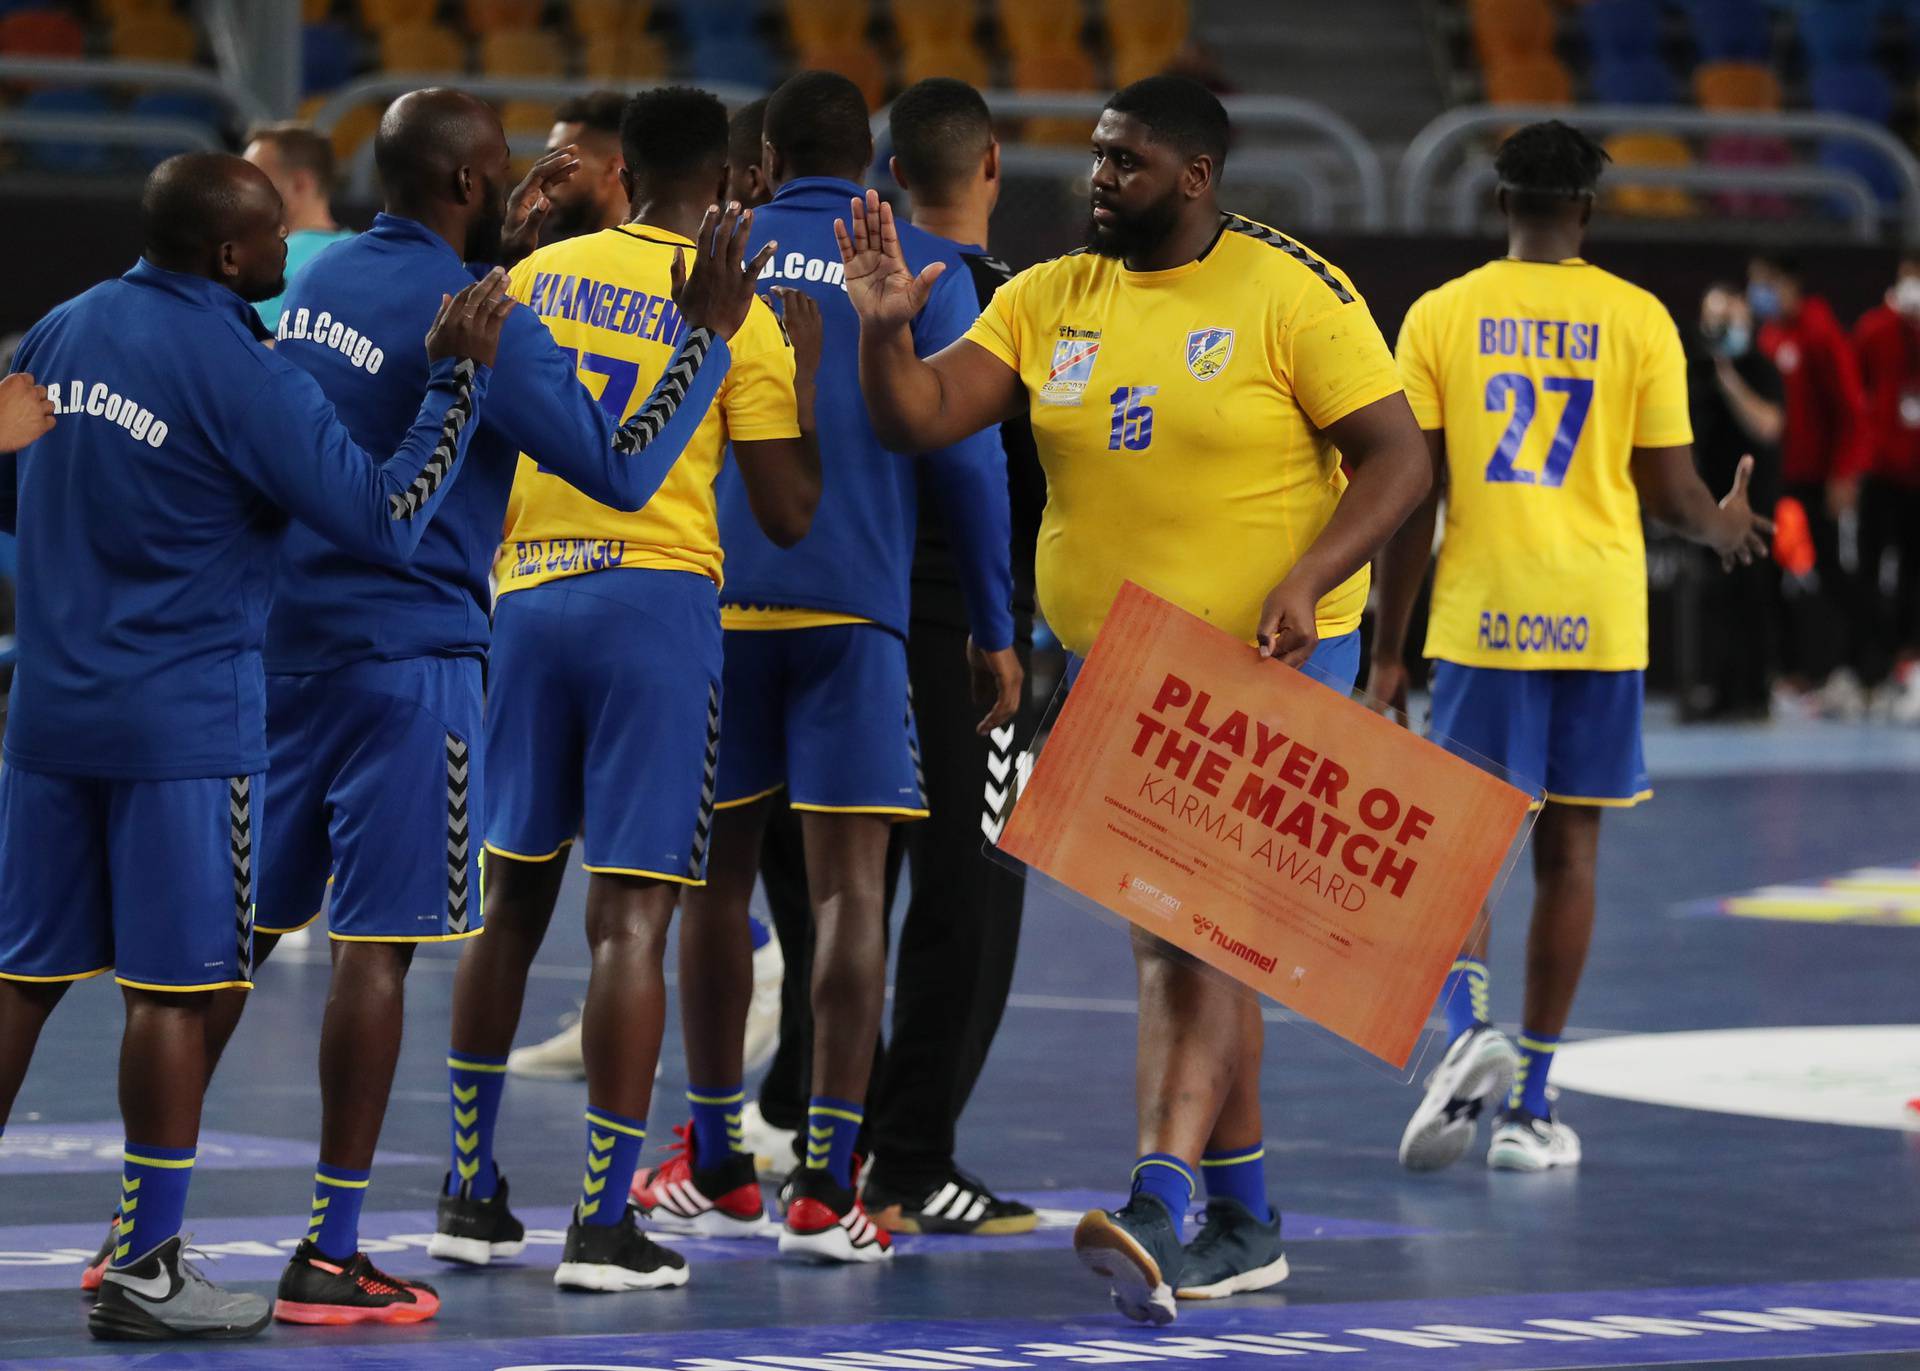 2021 IHF Handball World Championship - Preliminary Round Group D - Bahrain v D.R. Congo